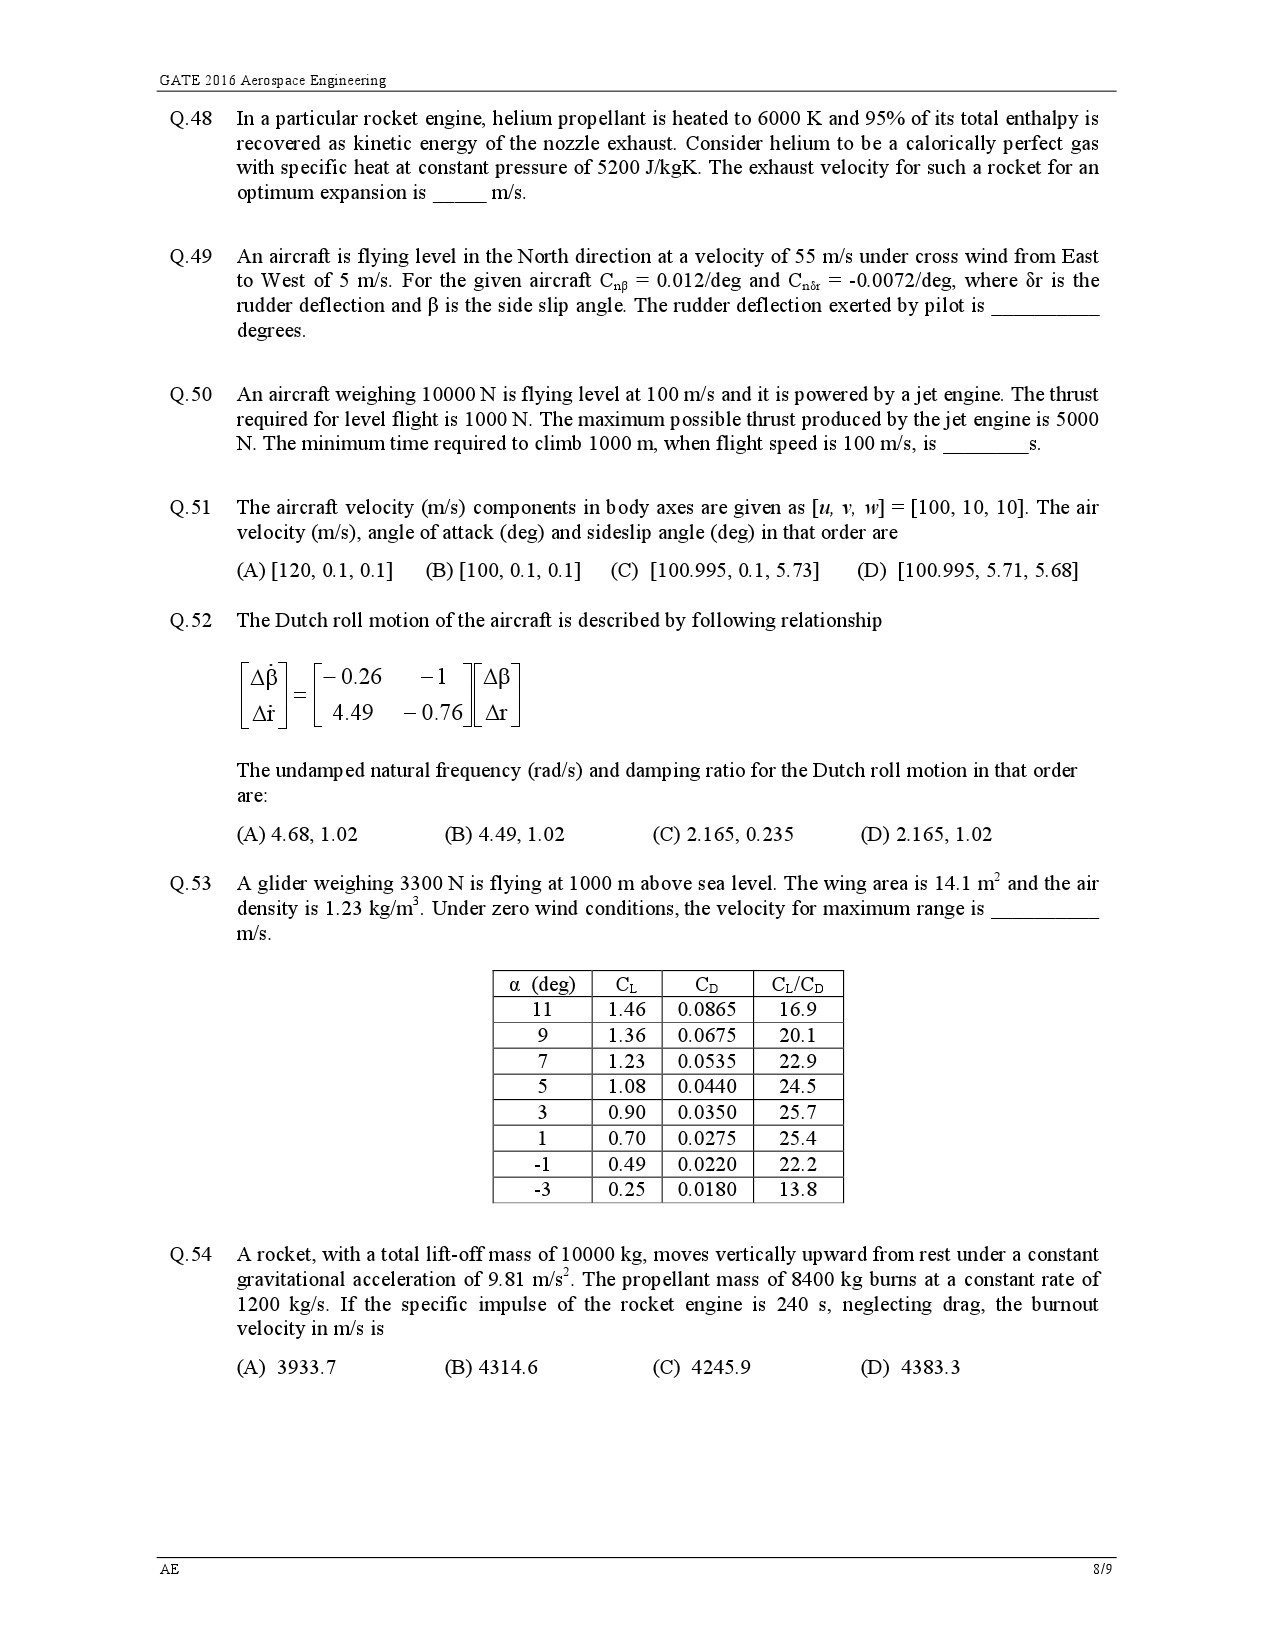 GATE Exam 2016 Aerospace Engineering Question Paper 8